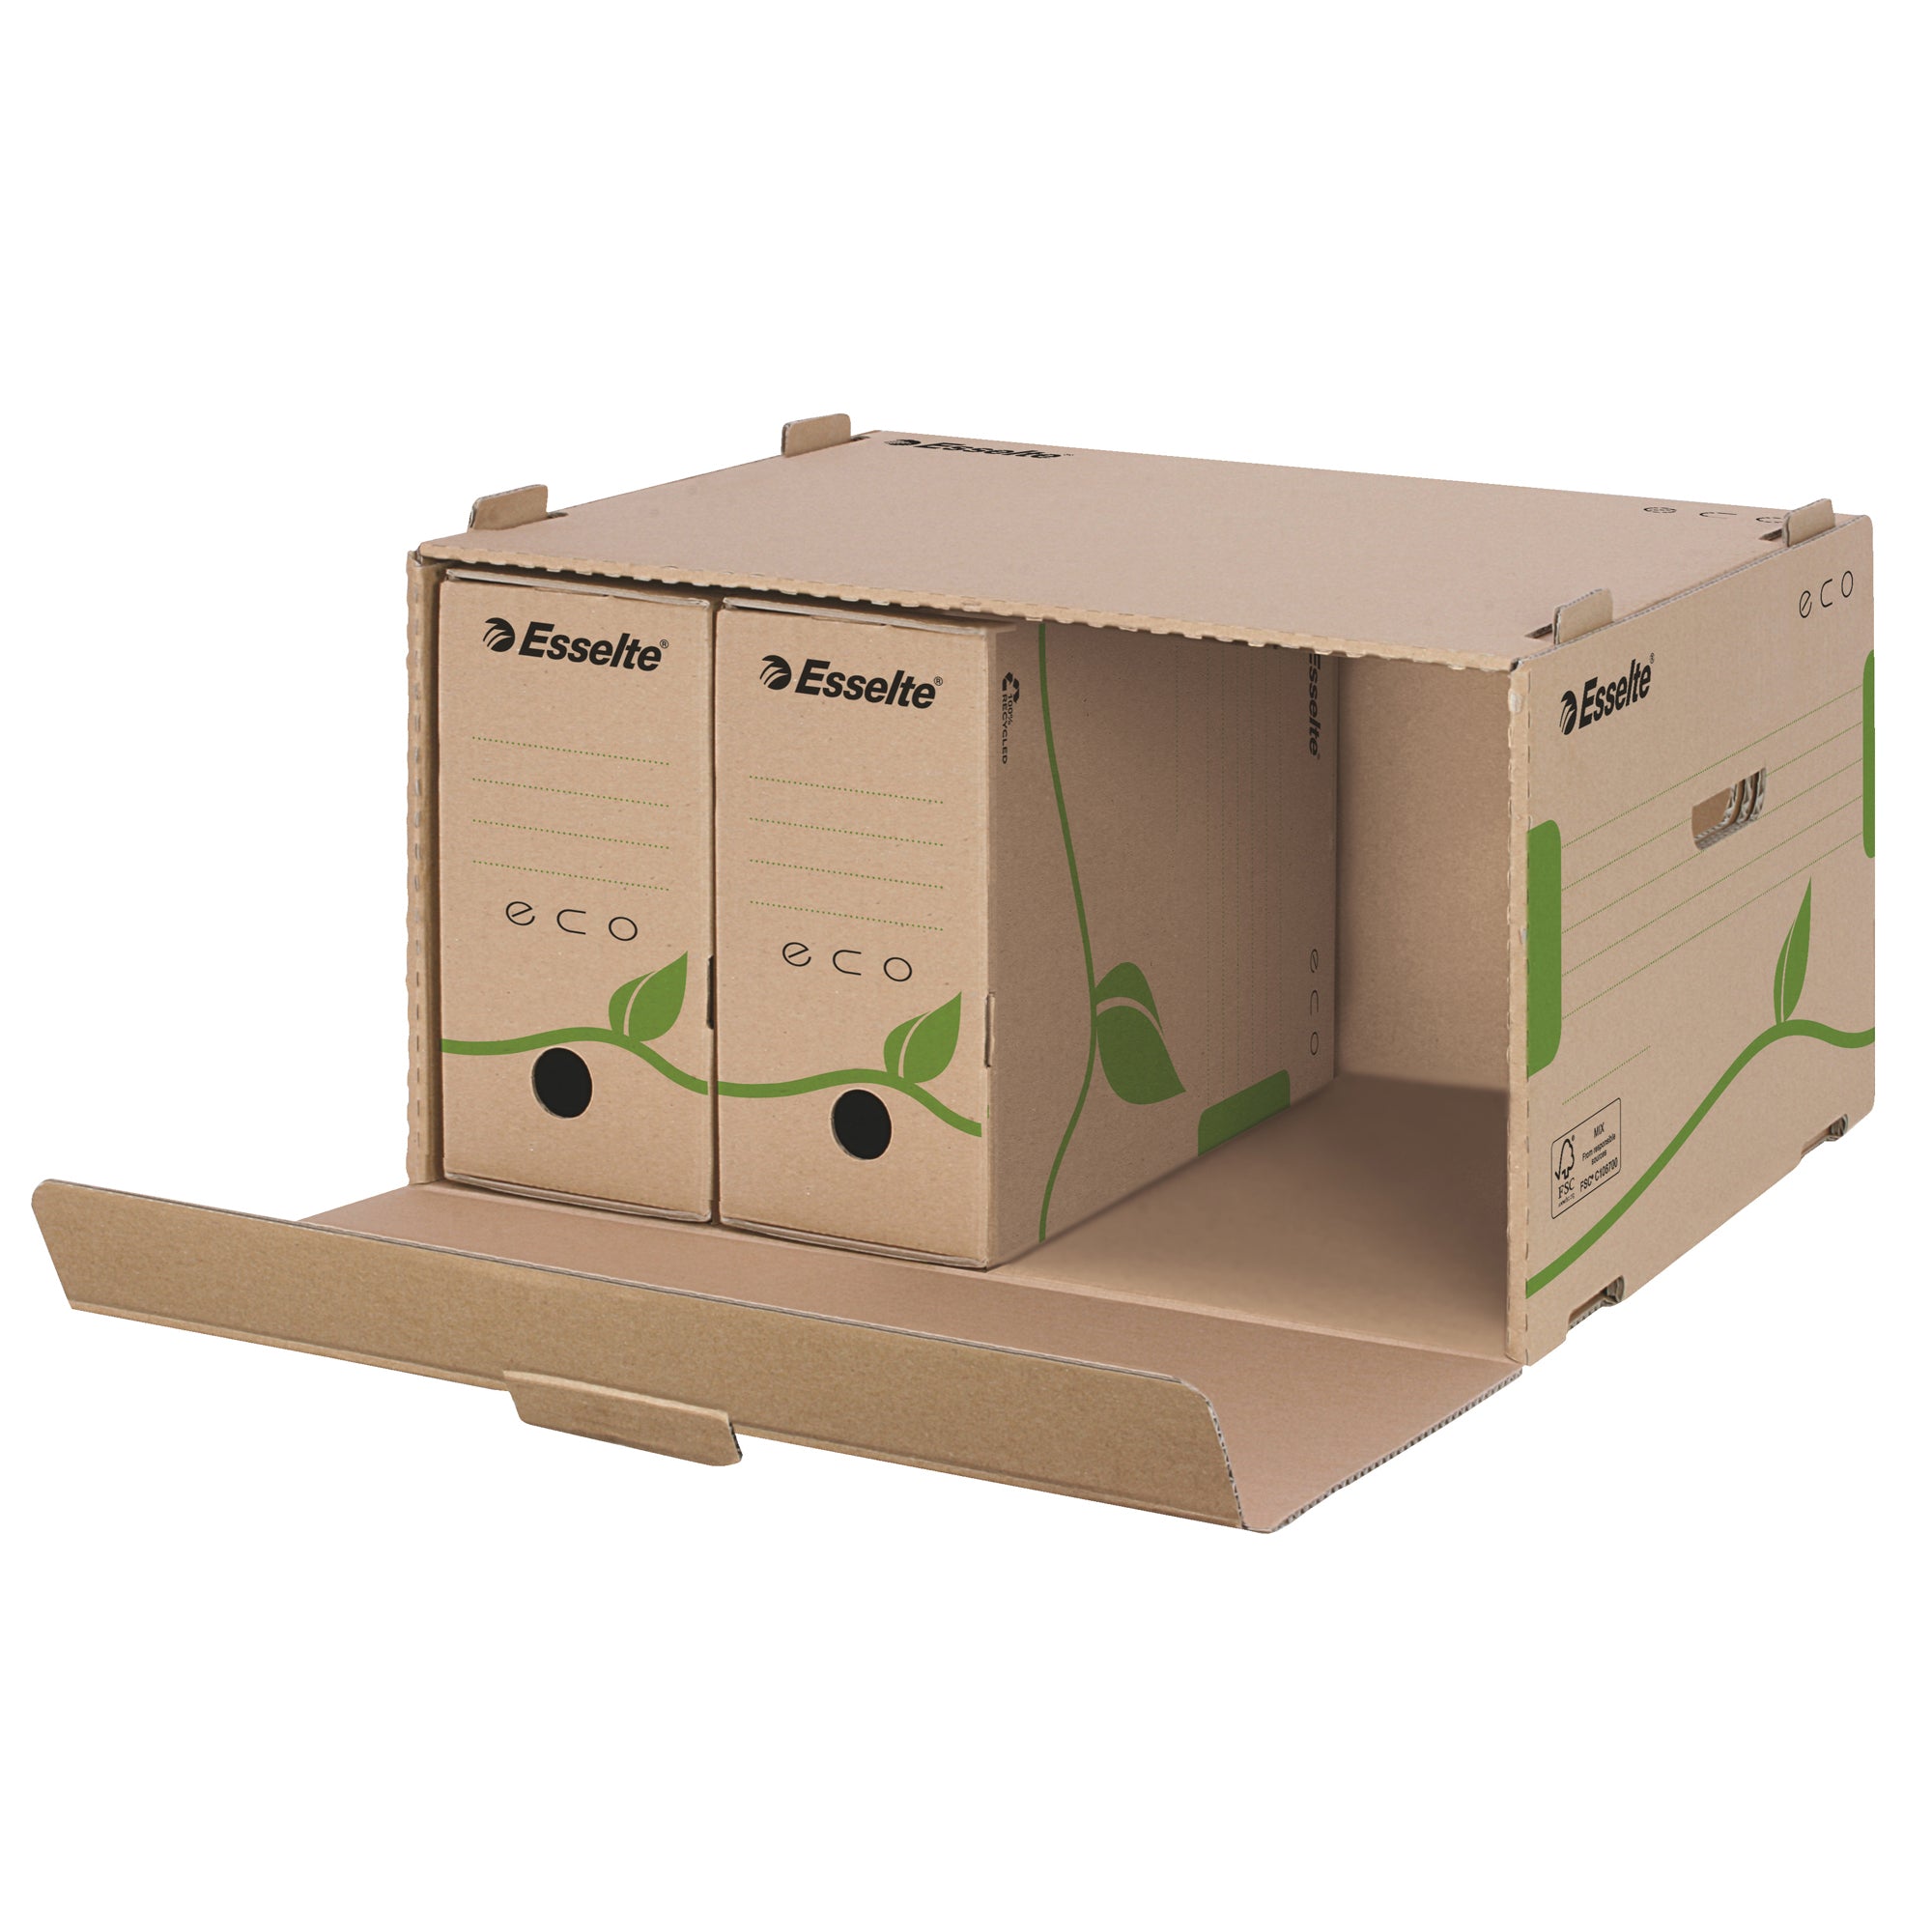 esselte-scatola-container-ecobox-340x439x259mm-apertura-laterale